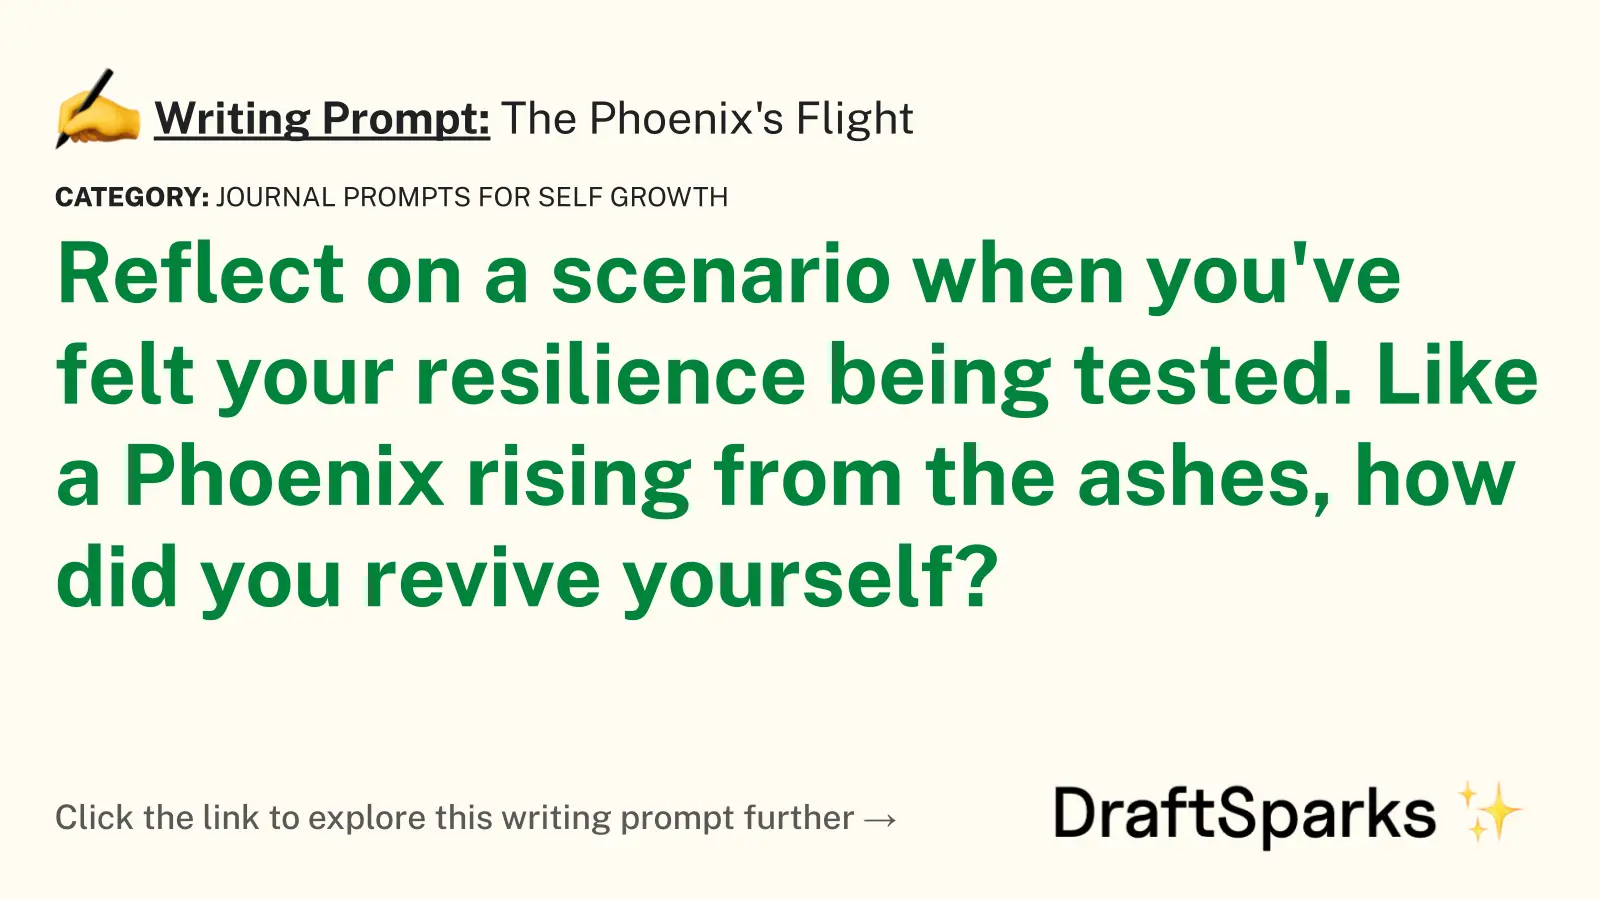 The Phoenix’s Flight